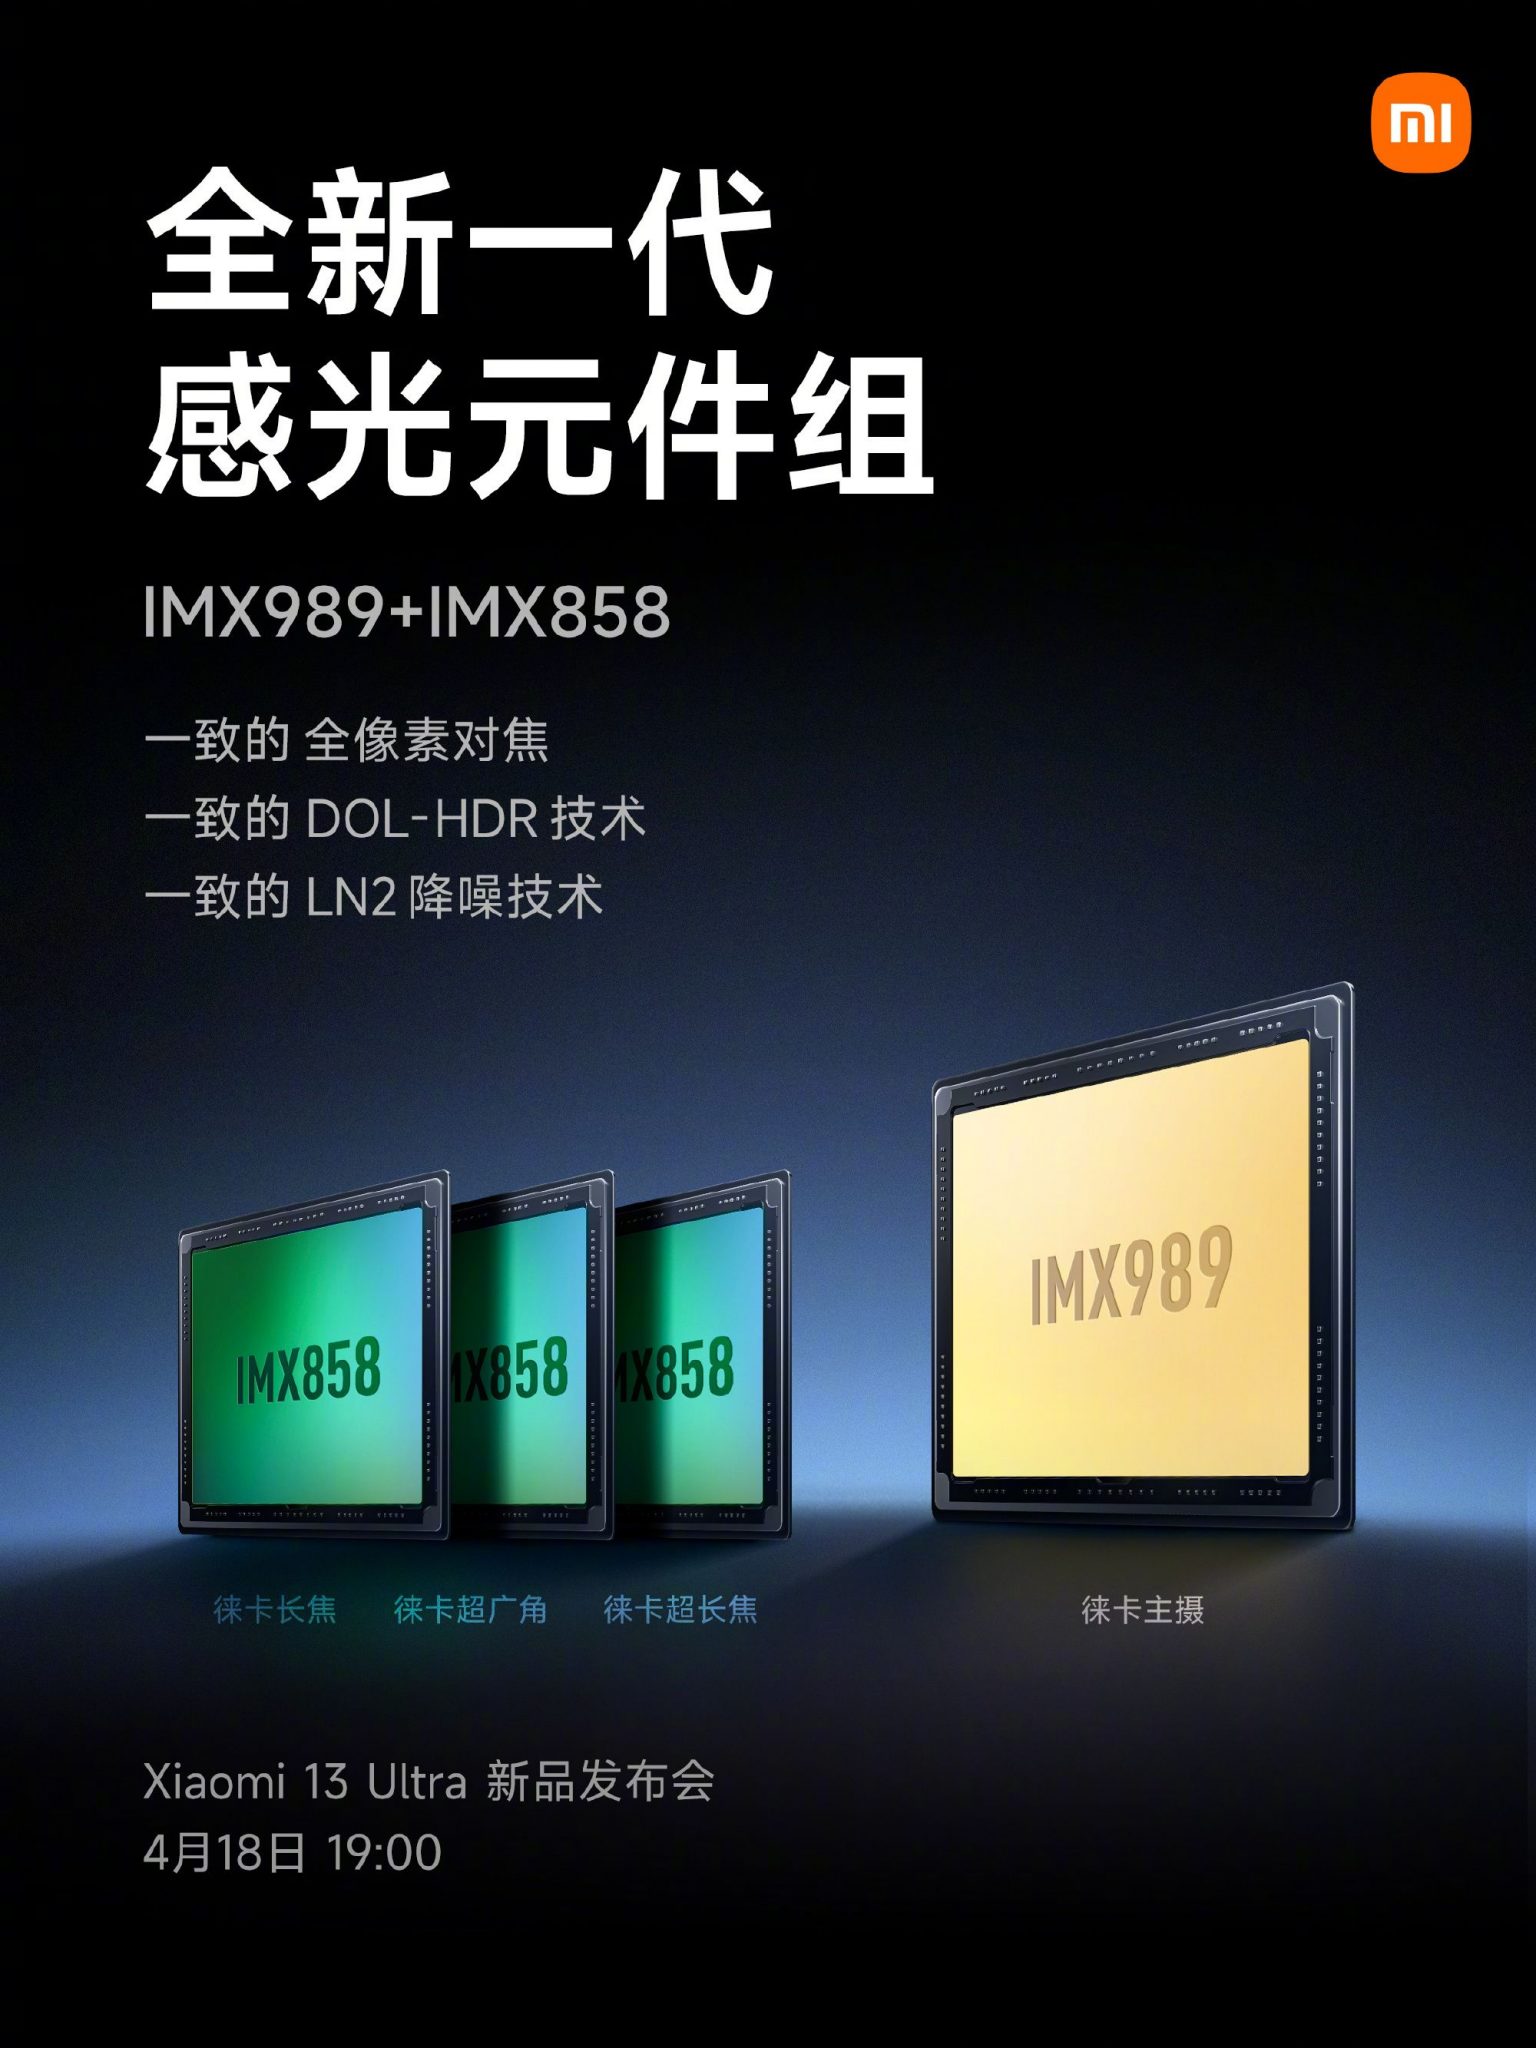 Xiaomi 13 Ultra camera poster